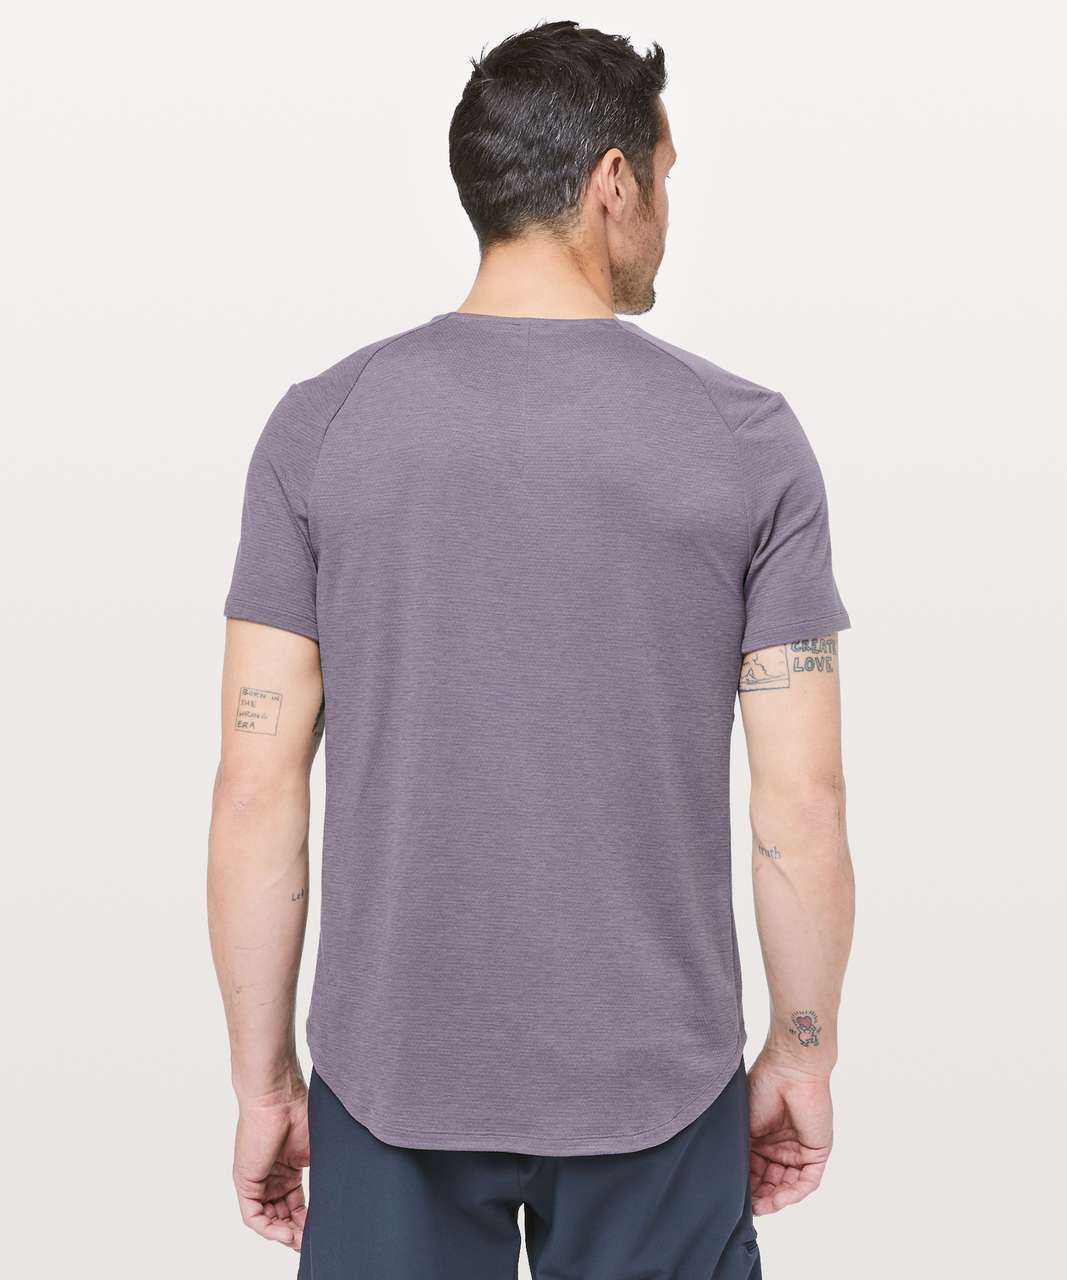 Lululemon Conflux Short Sleeve - Graphite Purple